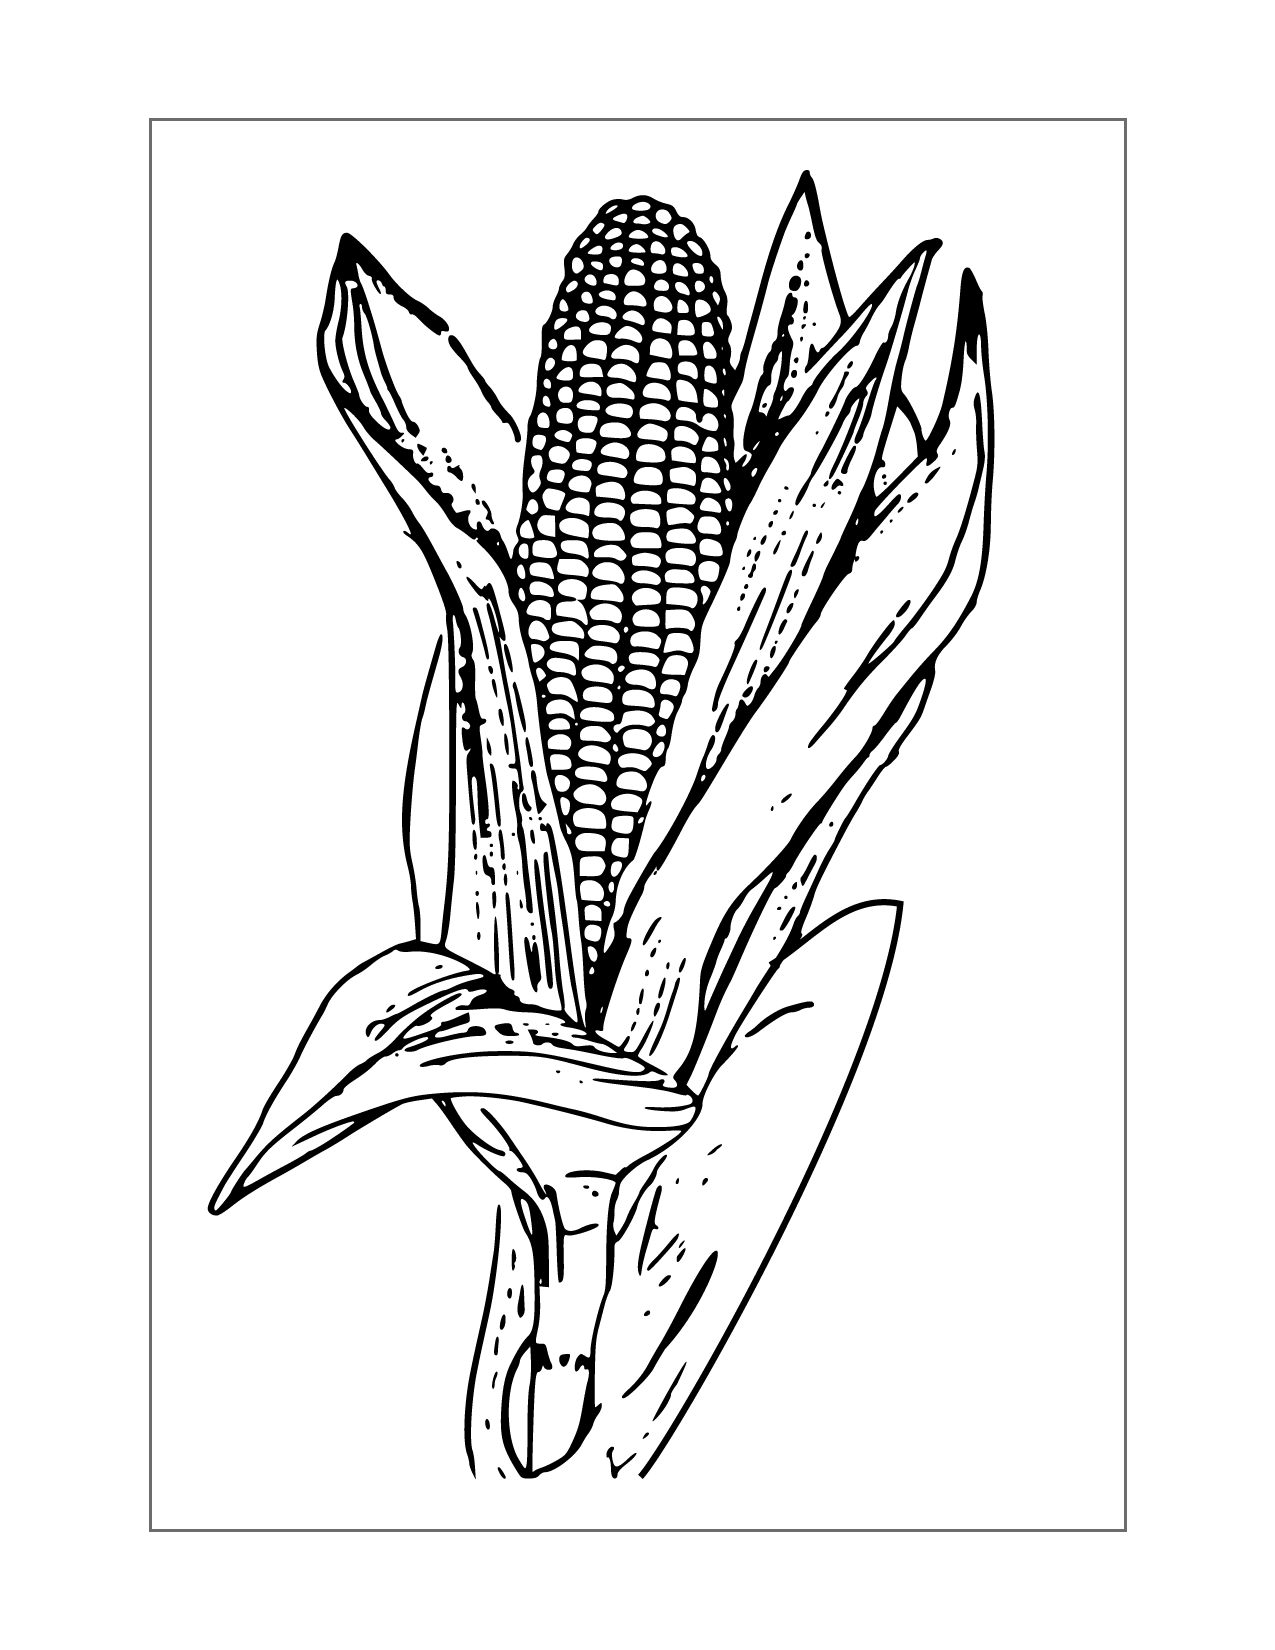 Corn Ear Coloring Pag